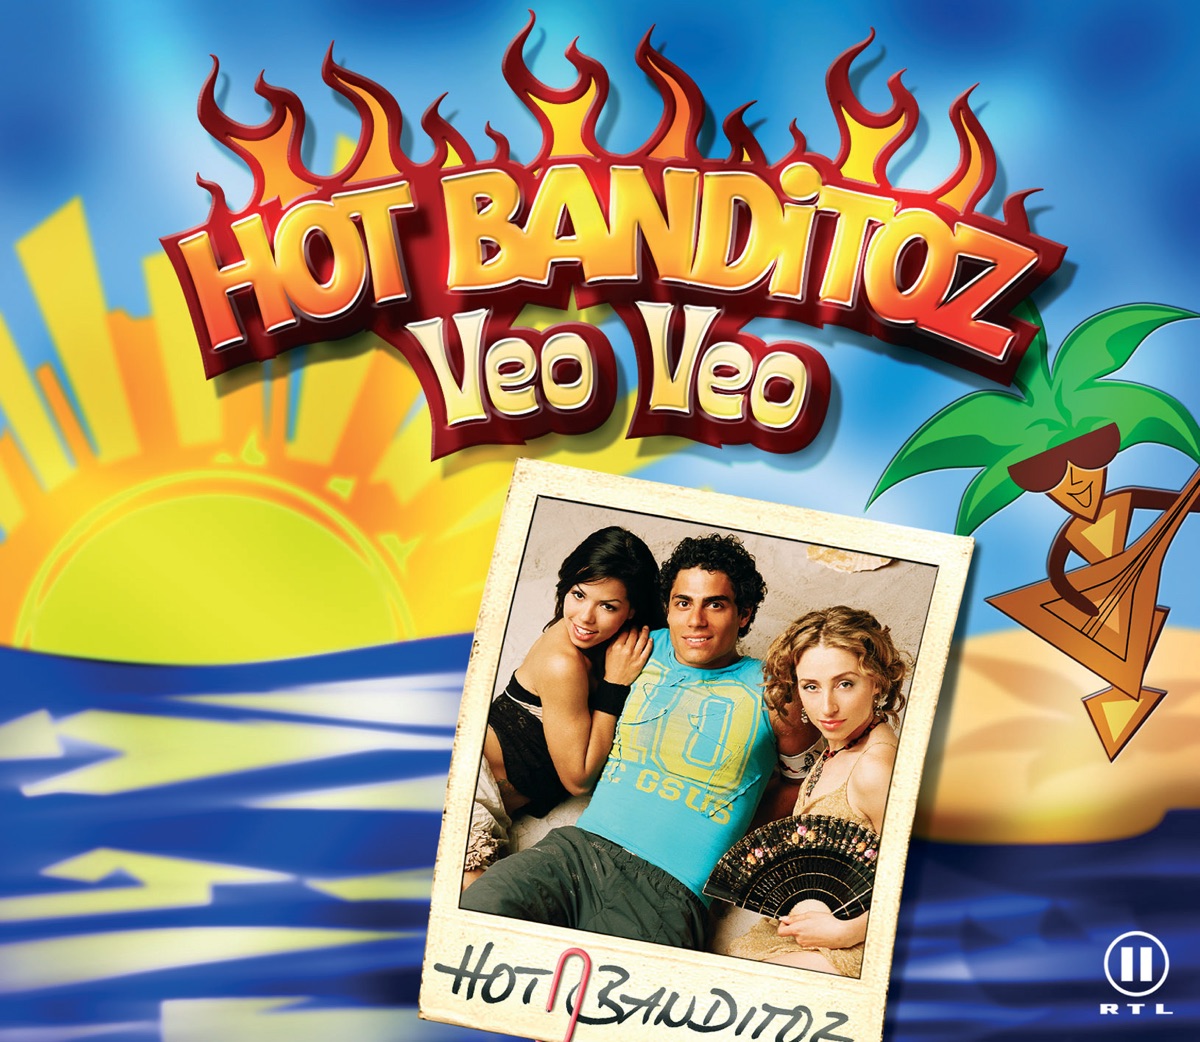 Hot Banditoz — Veo veo cover artwork